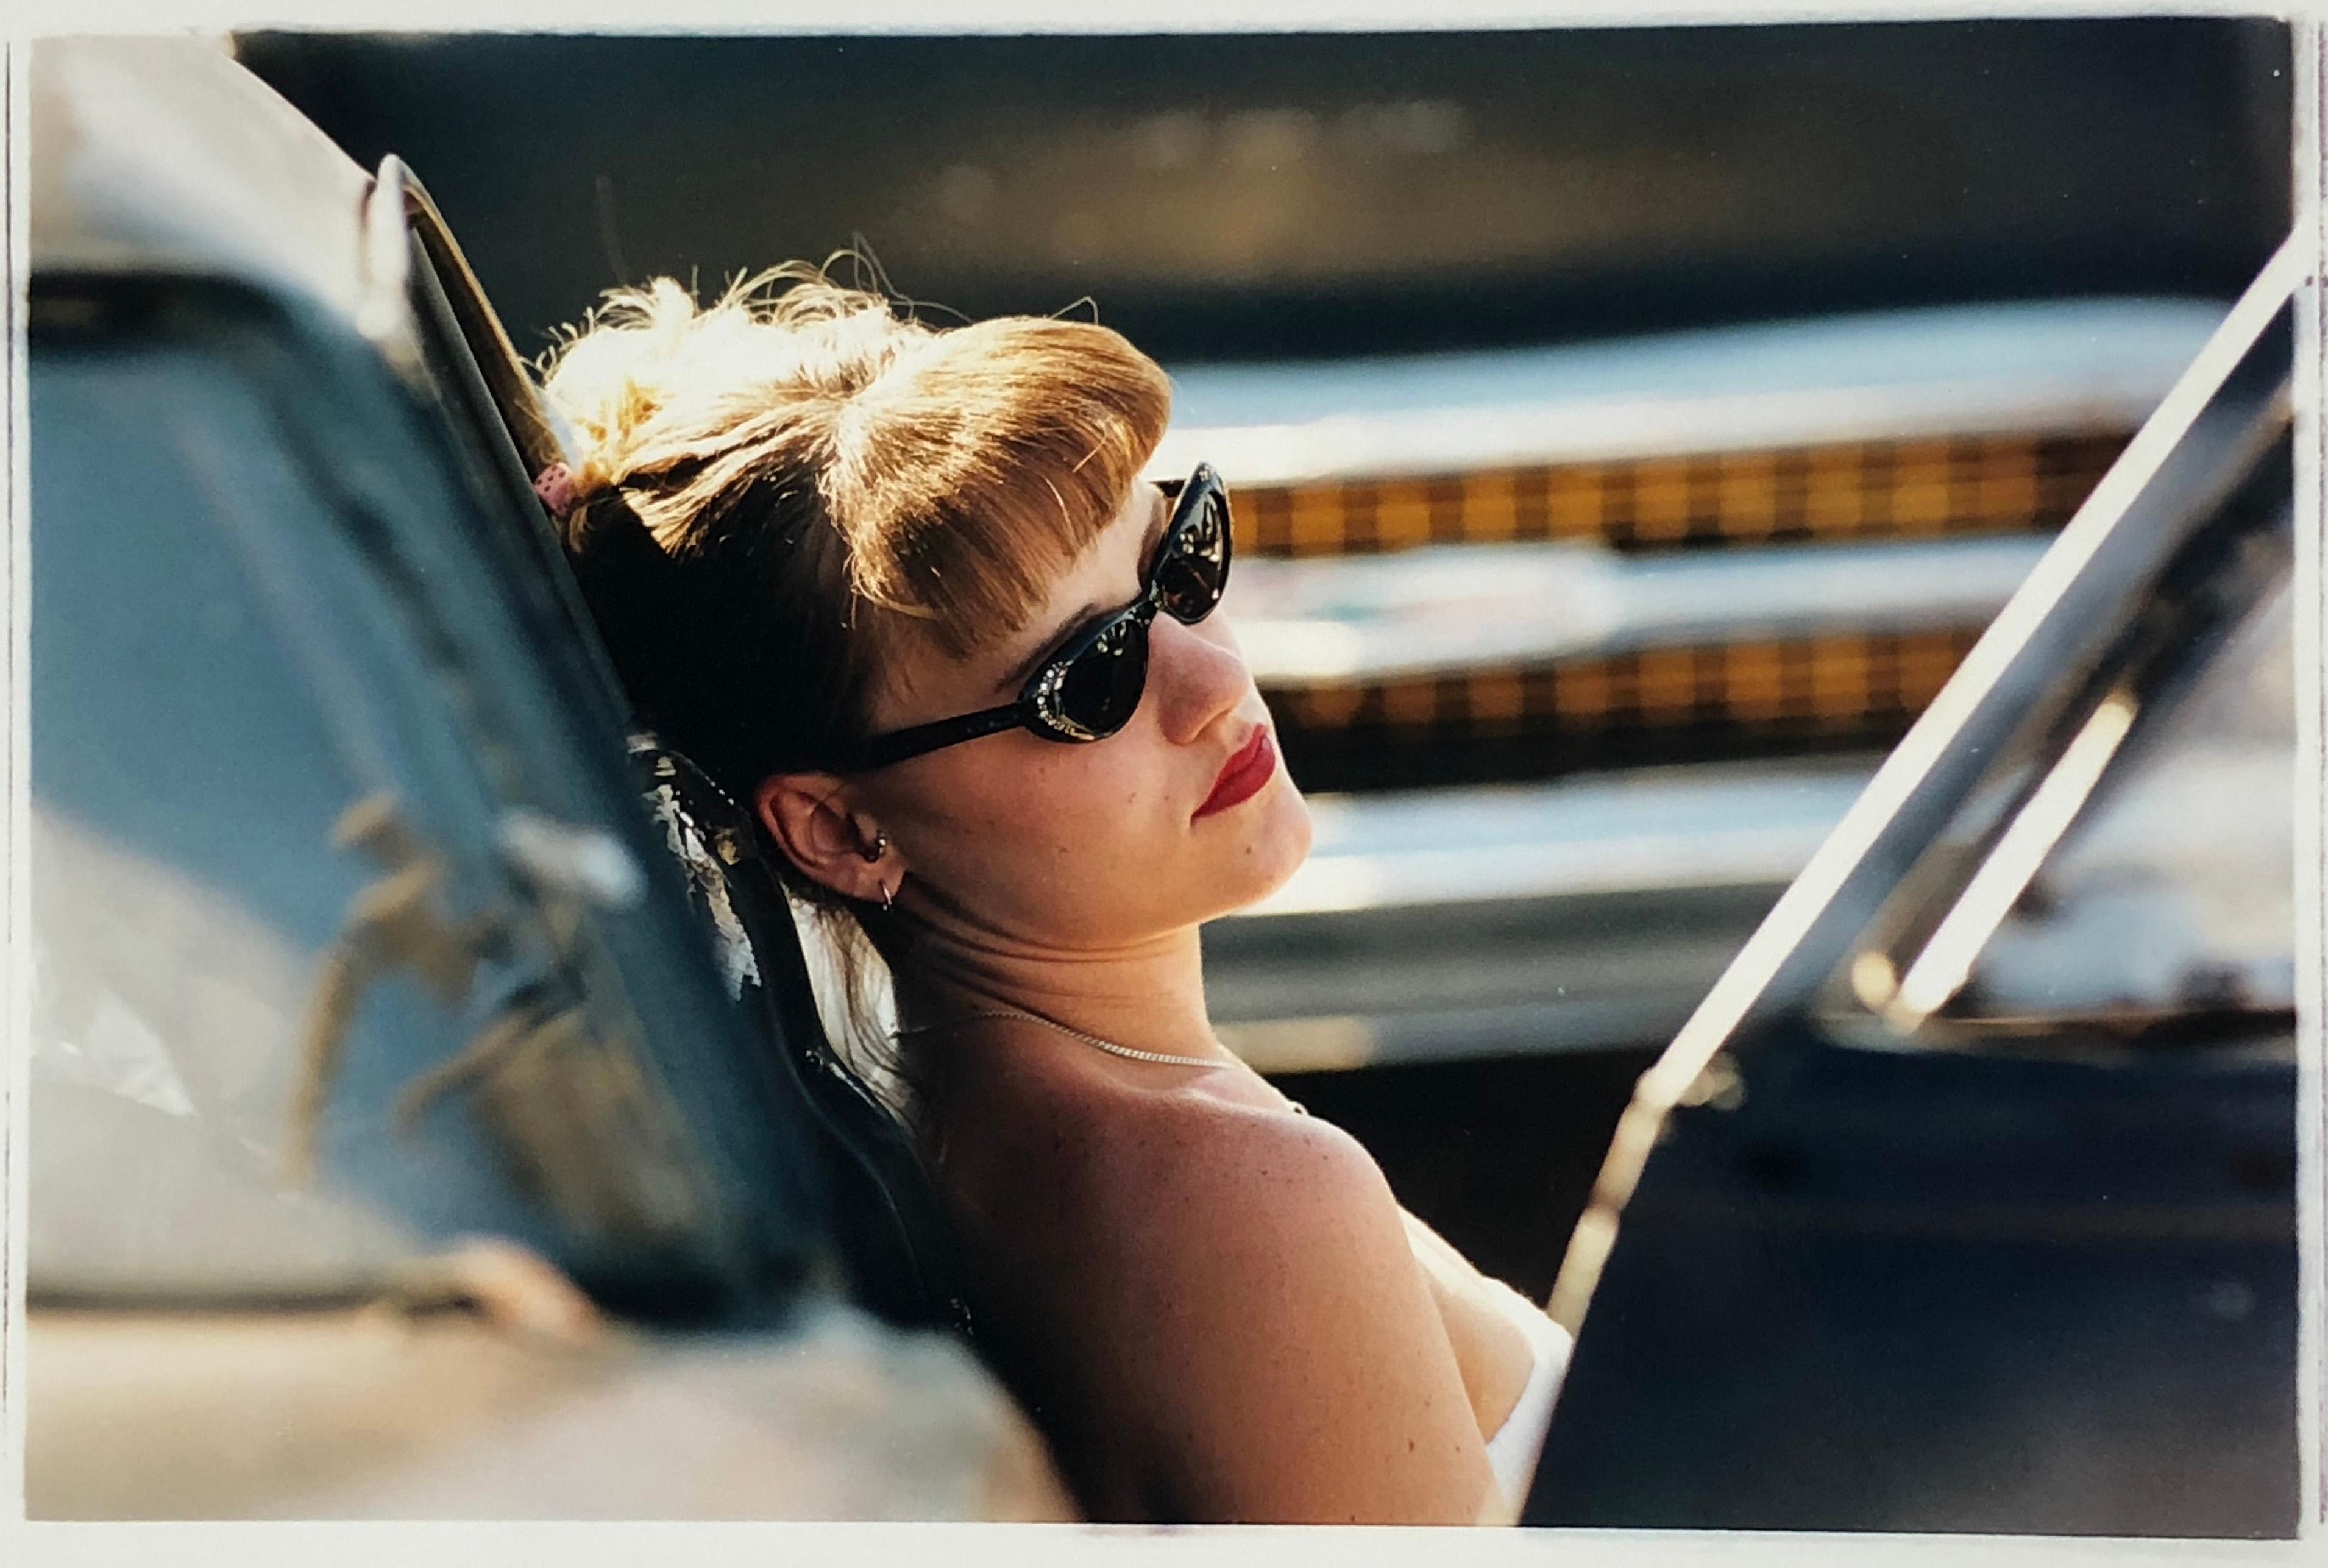 Richard Heeps Portrait Photograph – Miss Shifty, Las Vegas - Zeitgenössische Porträt-Farbfotografie